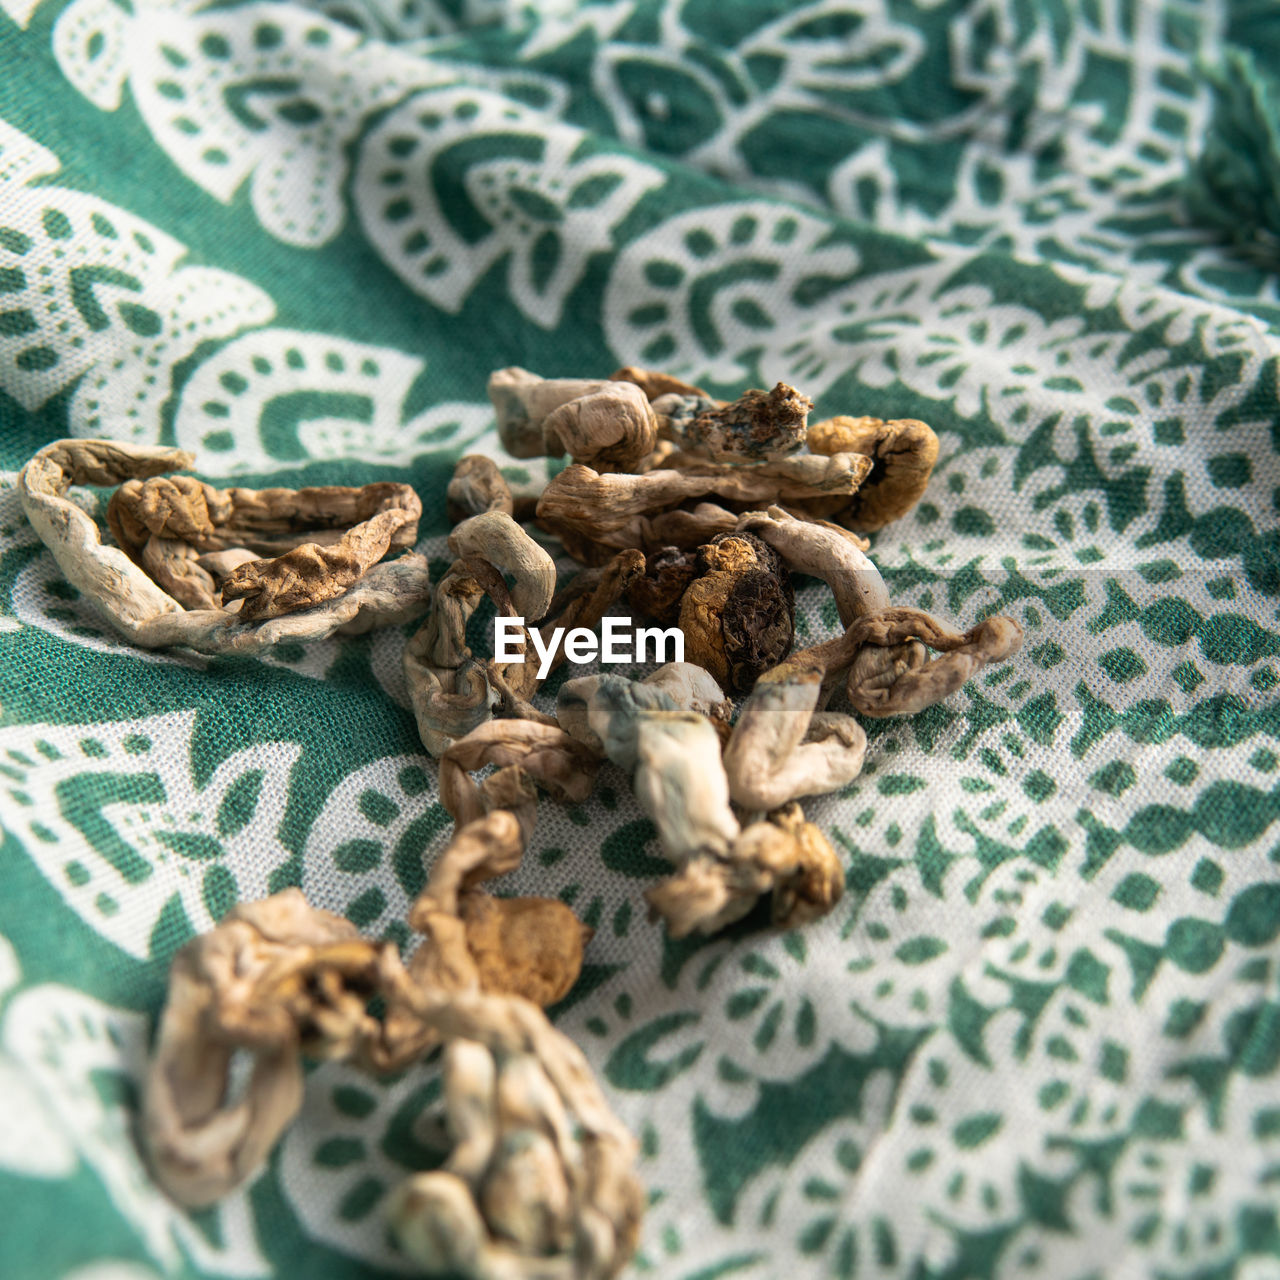 Strains of psilocybin mushrooms close-up